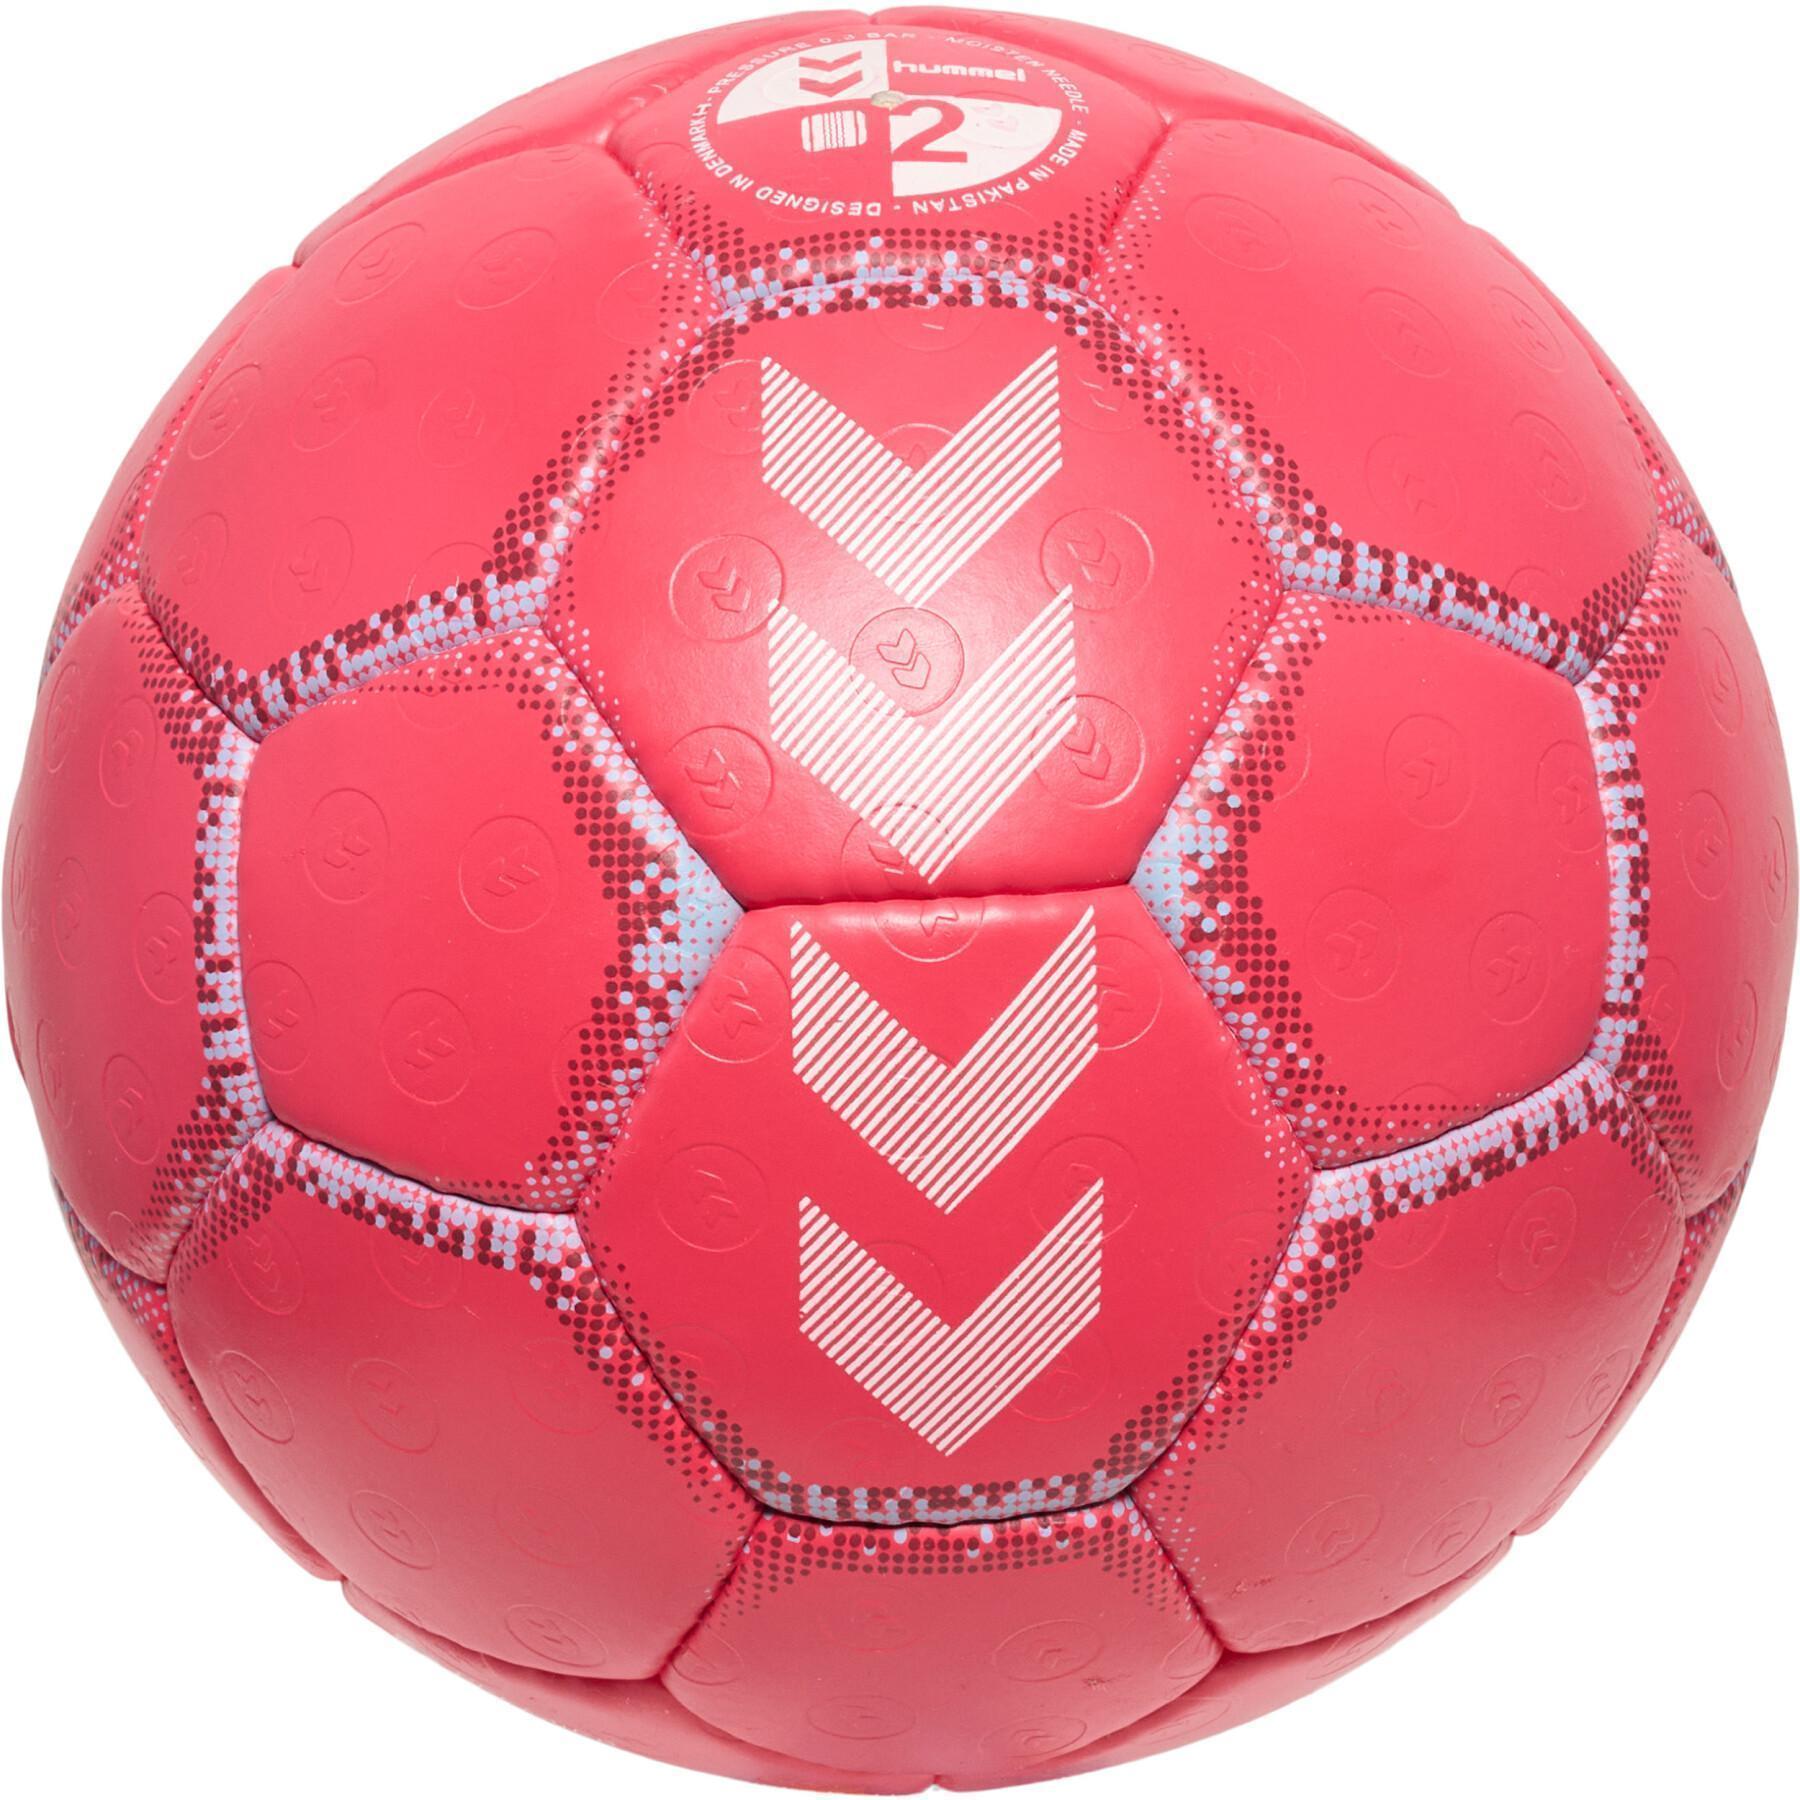 Balón Hummel Premier